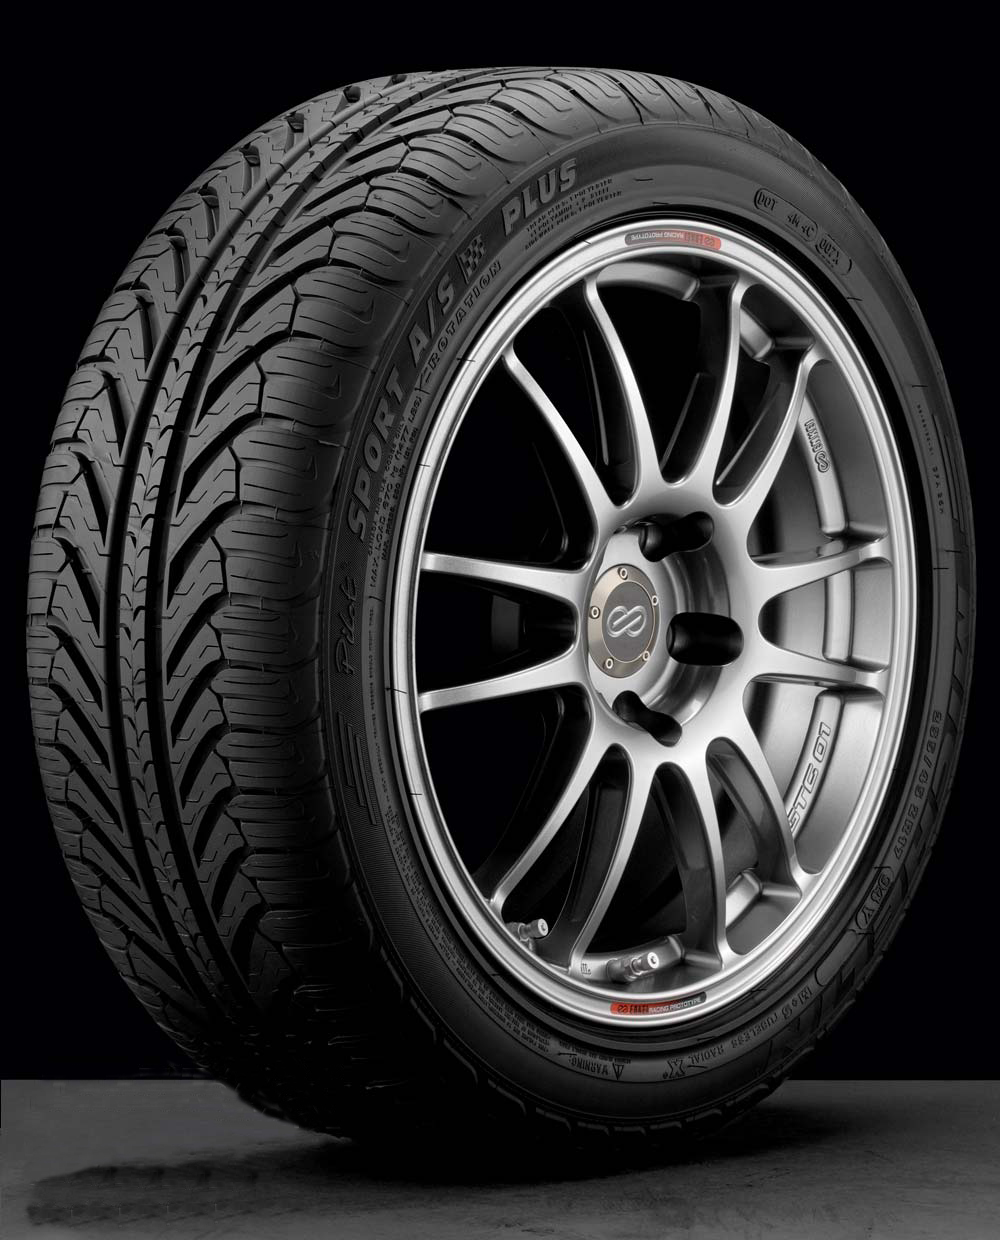 Michelin Pilot Sport A/S high-performance All Season Tires